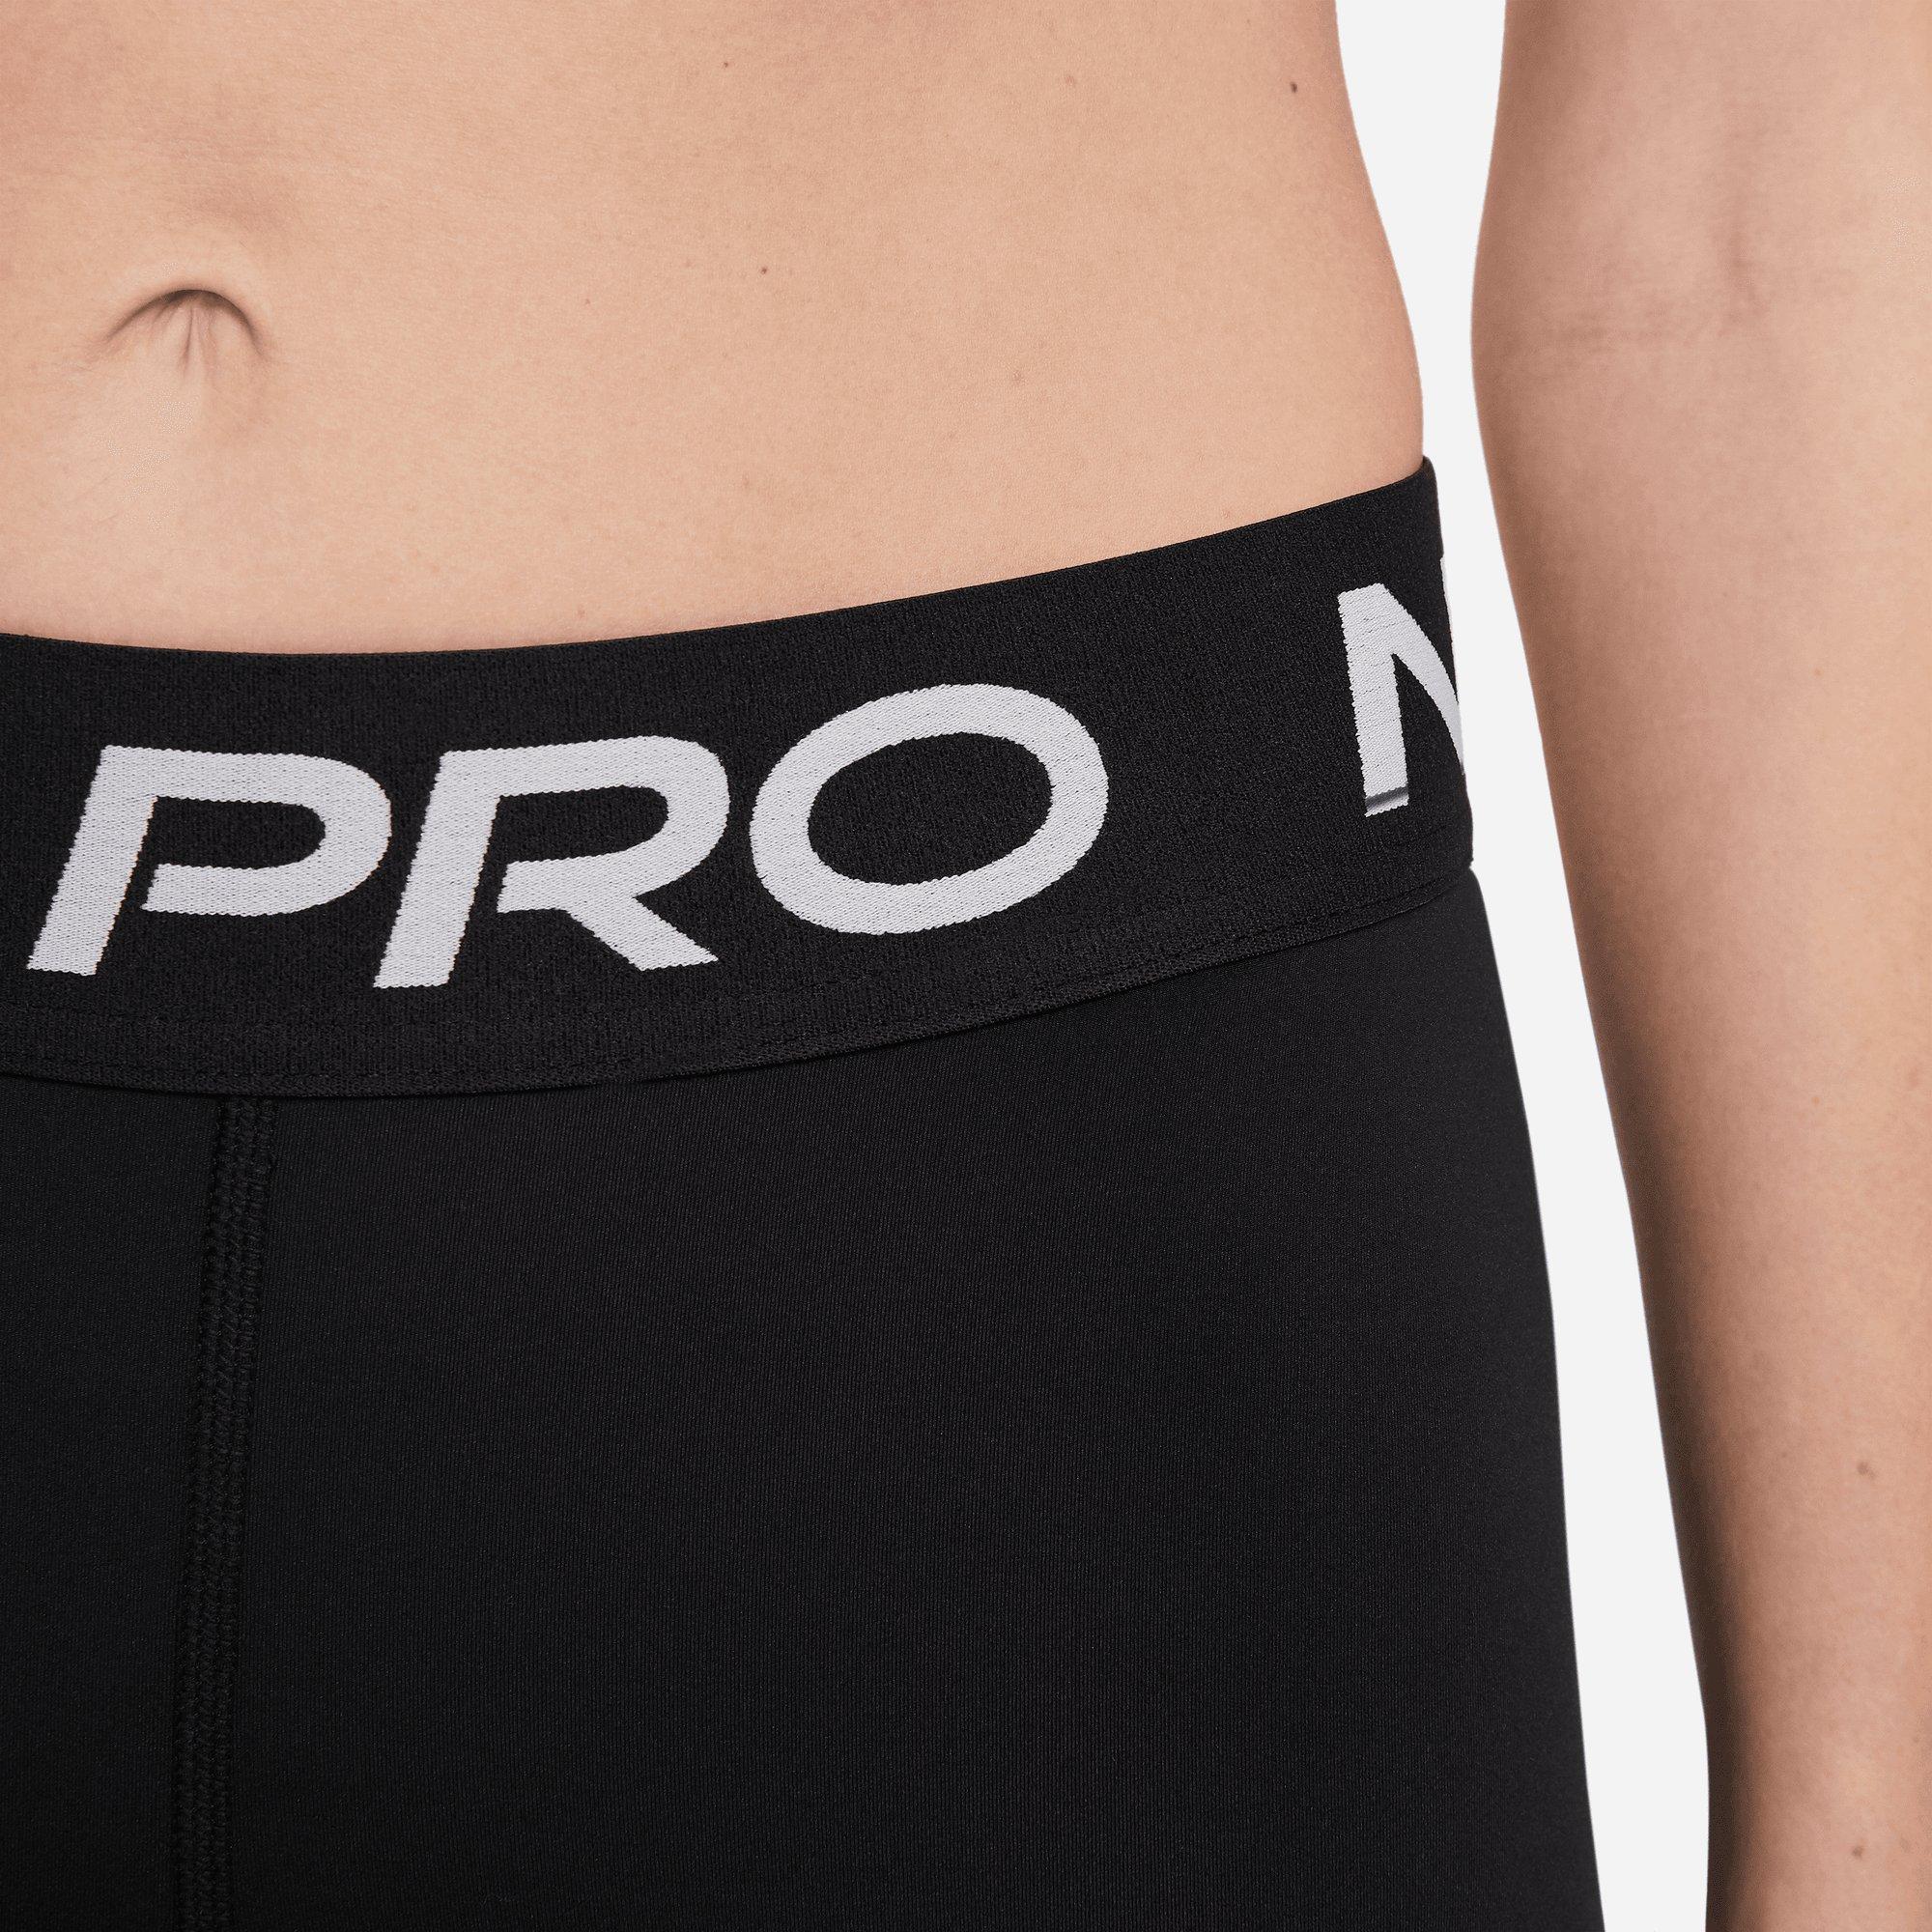 Shorts Nike Pro 5In Feminino – Nike – Move ON Fitness Store